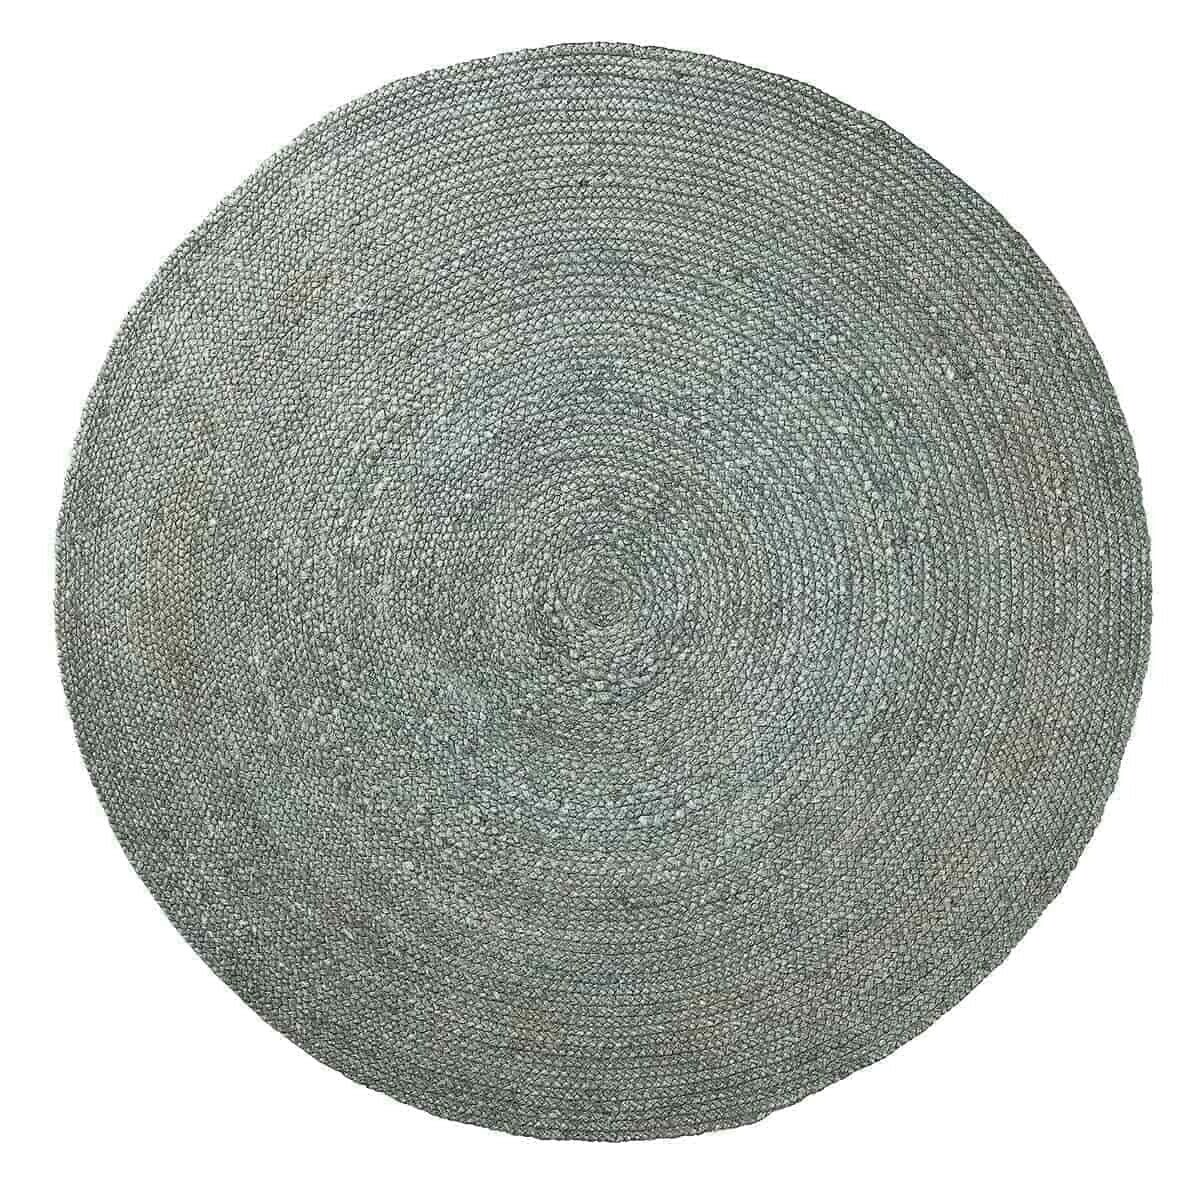 tapis rond en jute coloris bleu gris modele circle